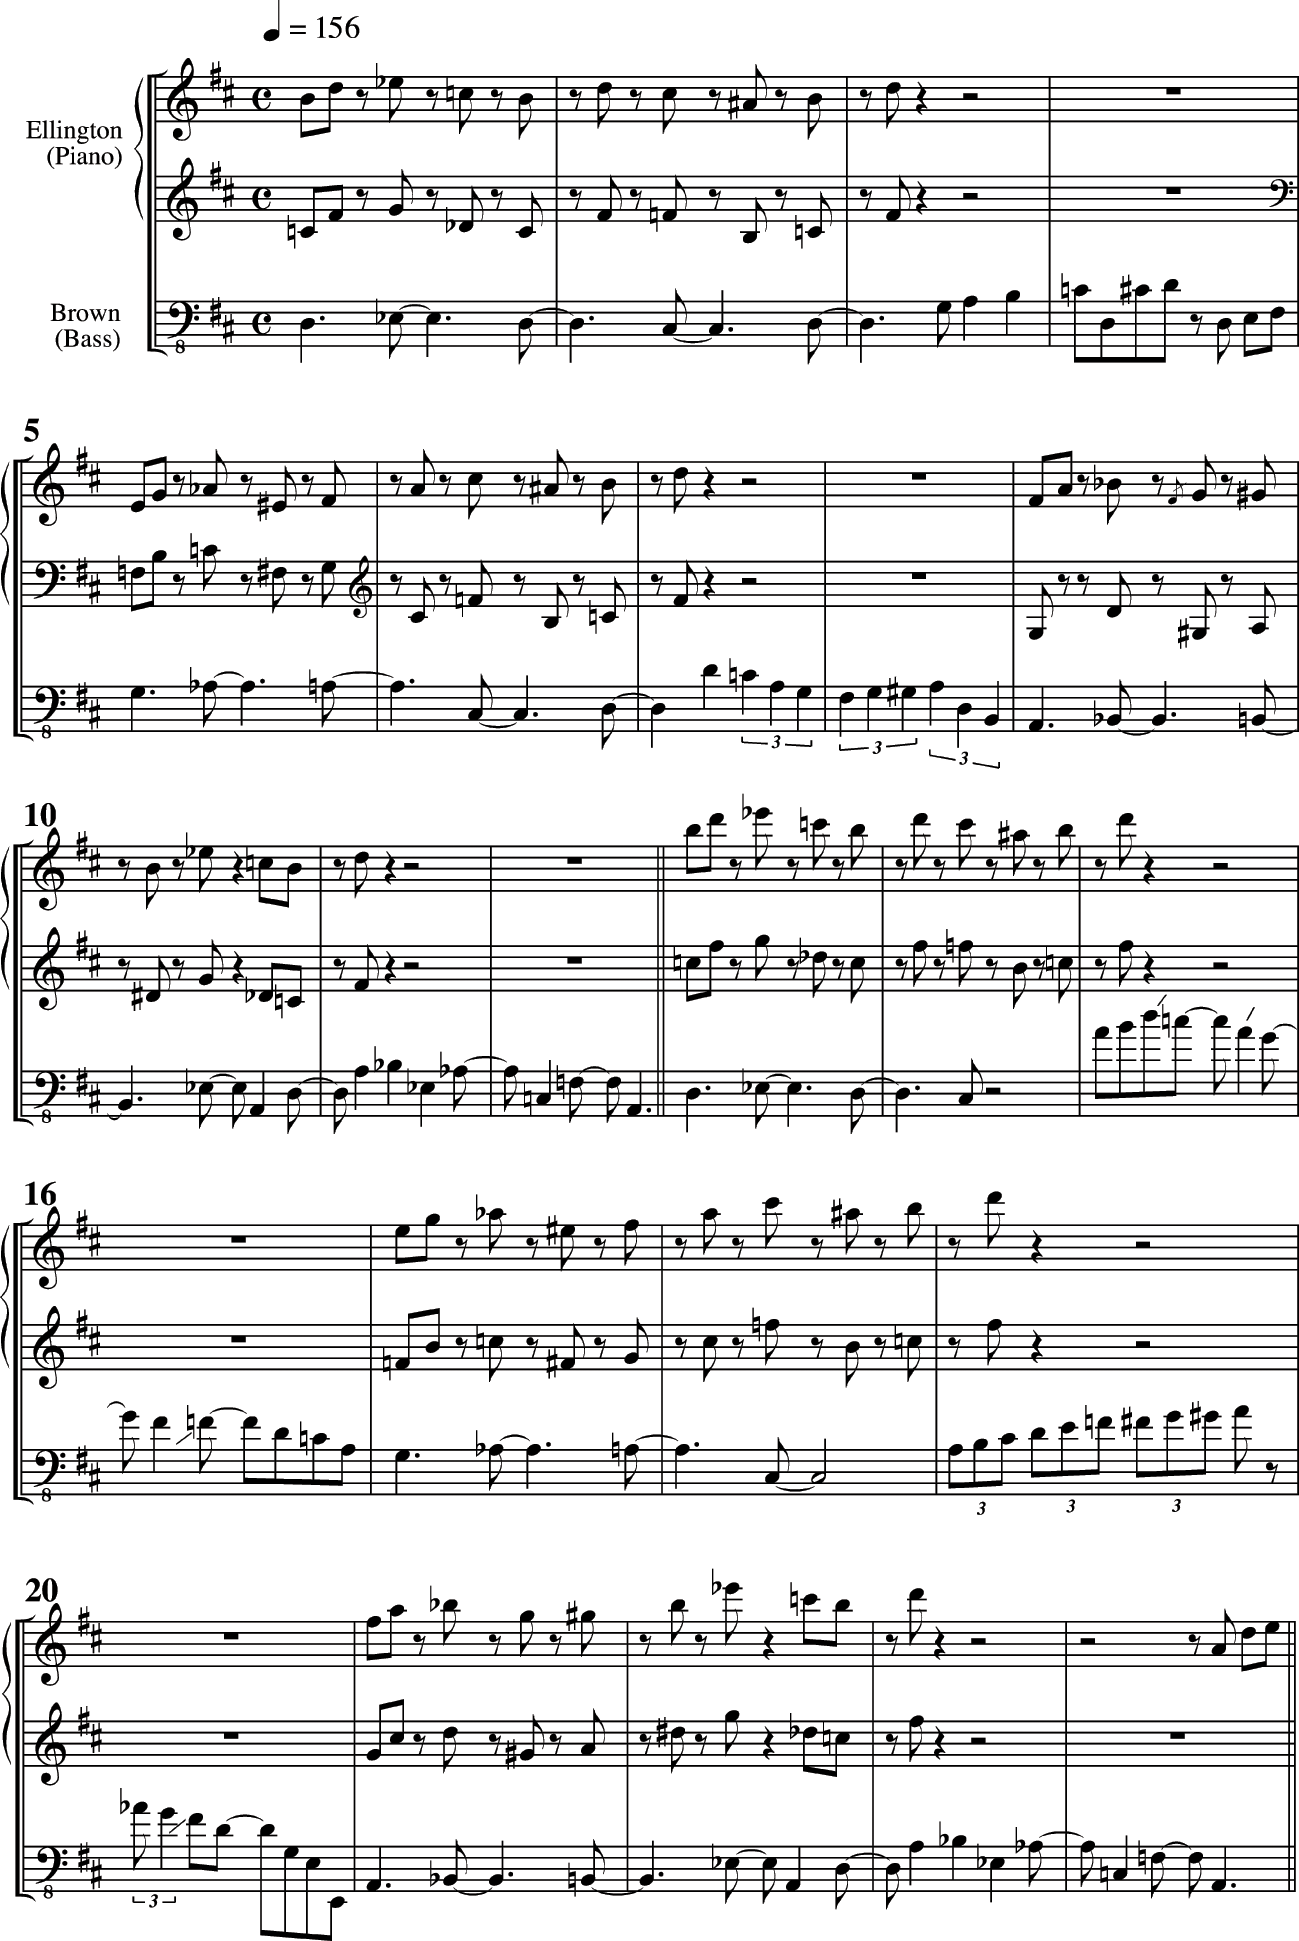 Prelude - sheet music - DeLange downloadable sheet music